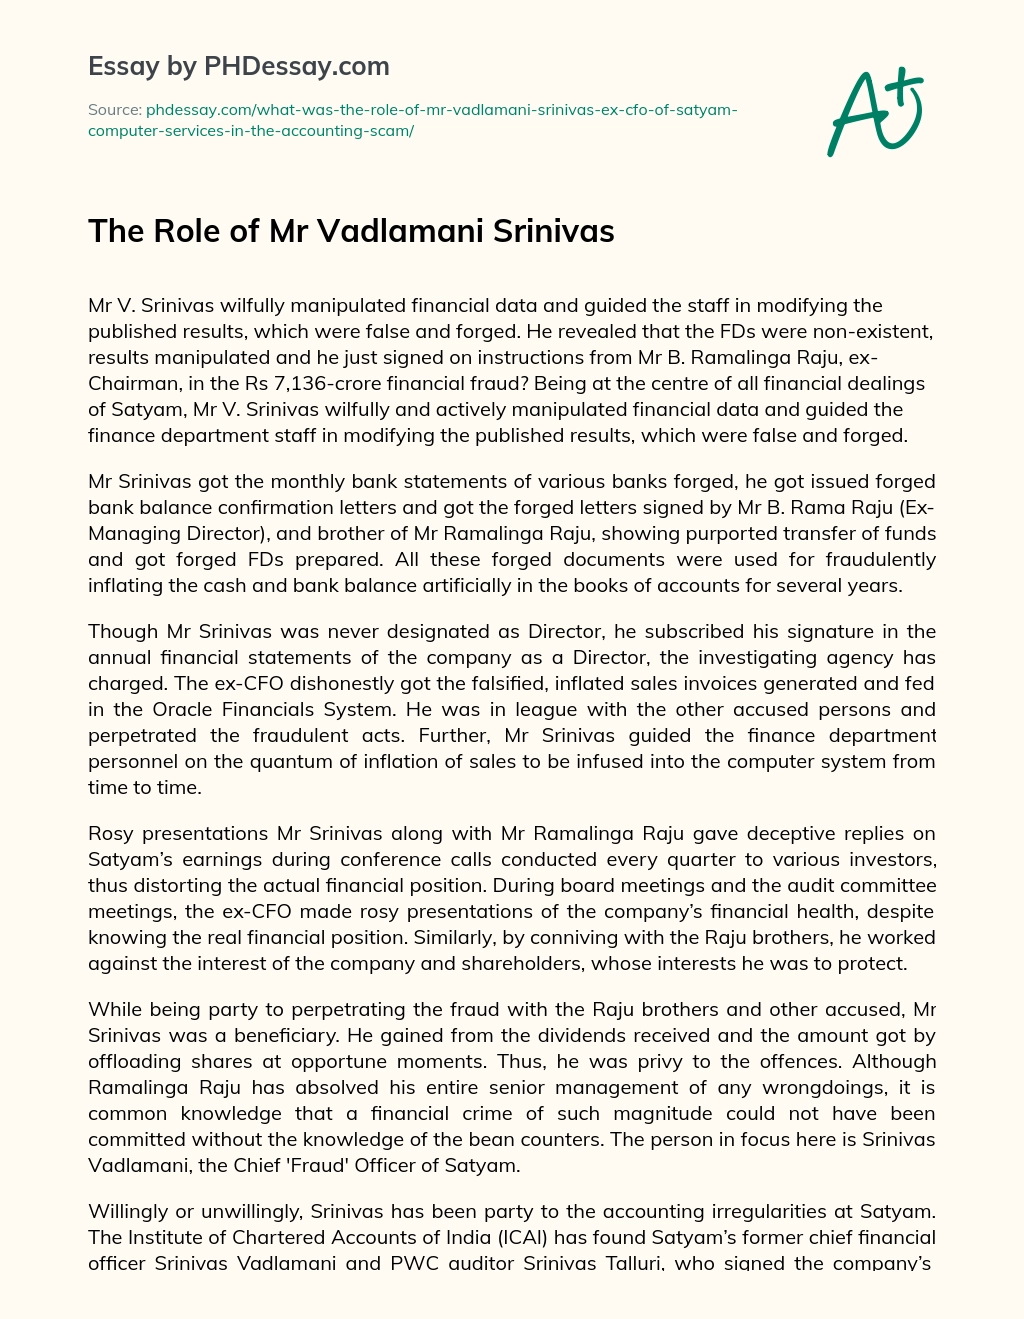 The Role of Mr Vadlamani Srinivas essay